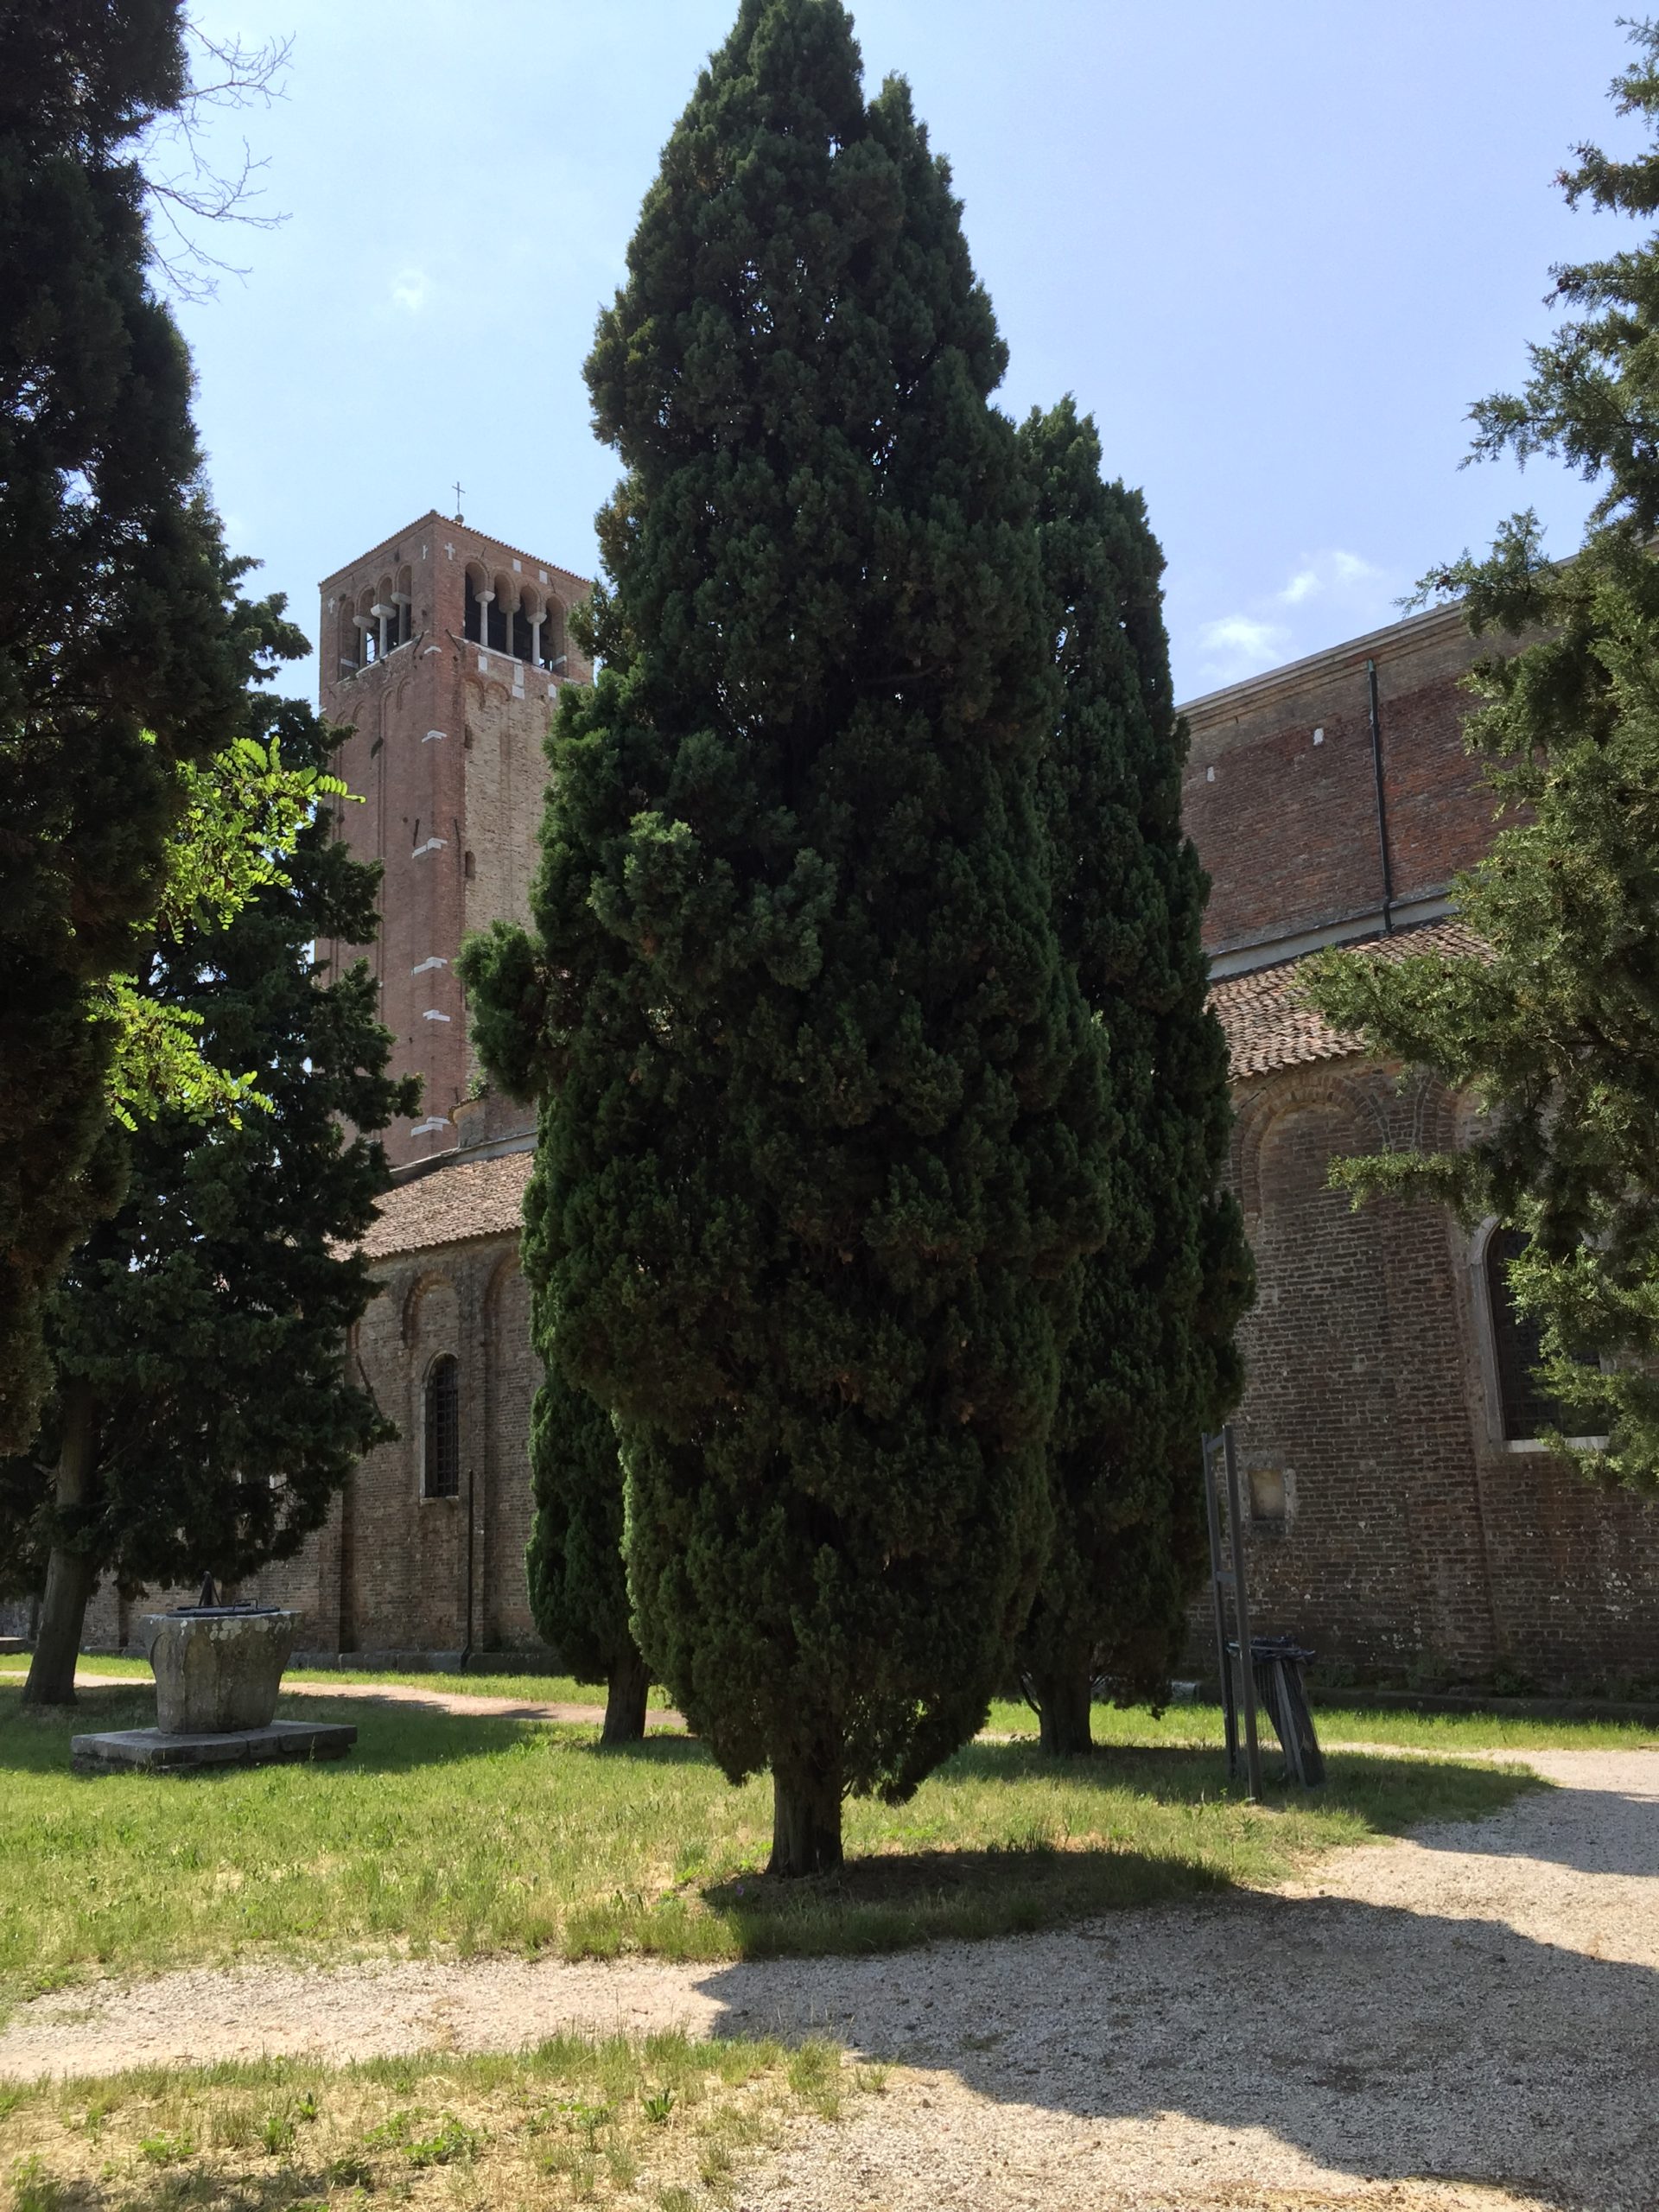 Torcello - Basilica di Santa Maria Assunta